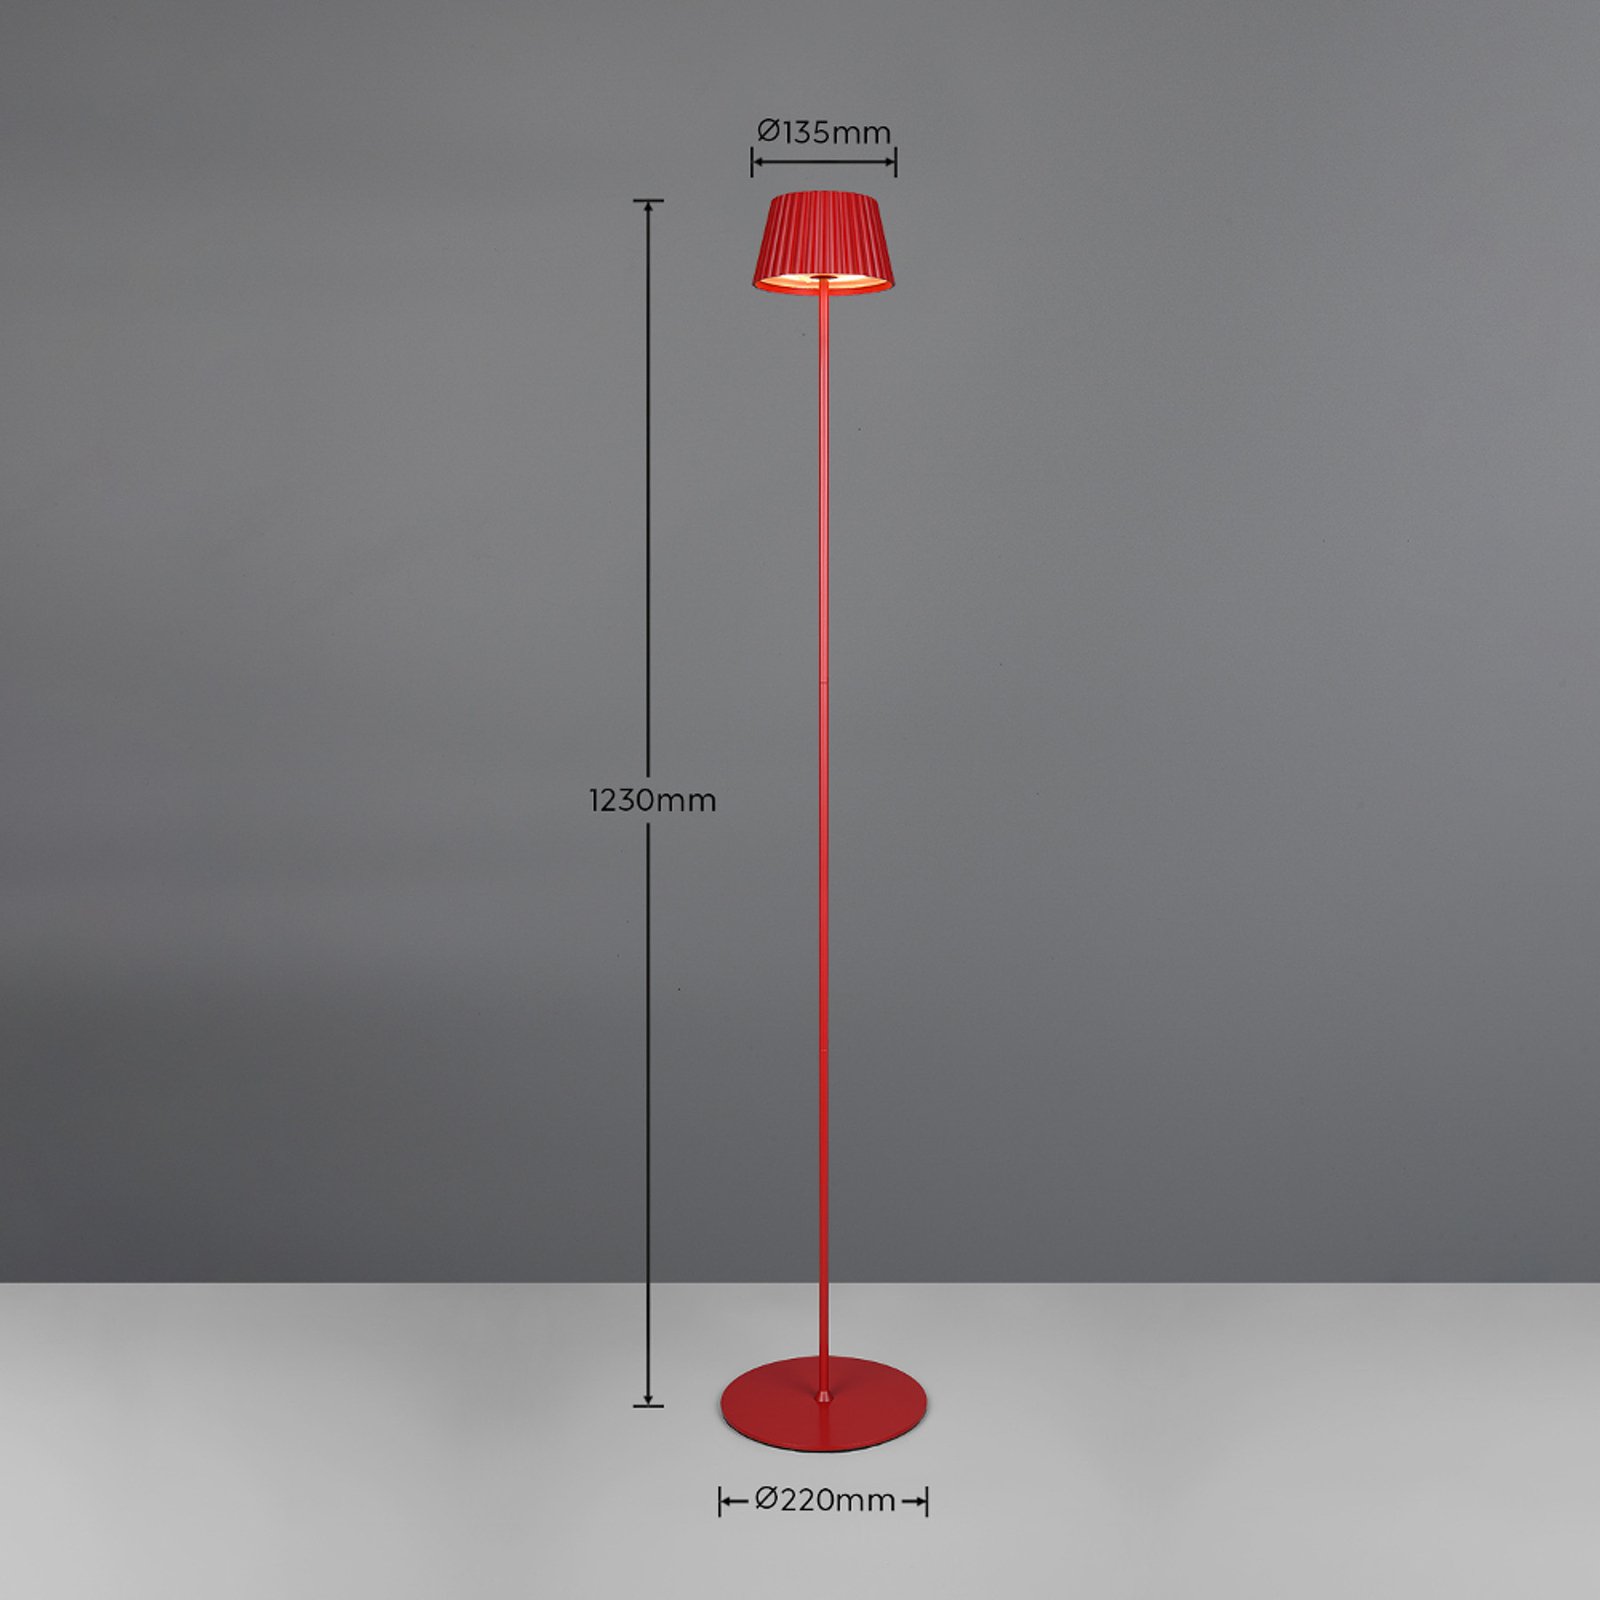 LED vloerlamp Suarez, rood, hoogte 123 cm, metaal